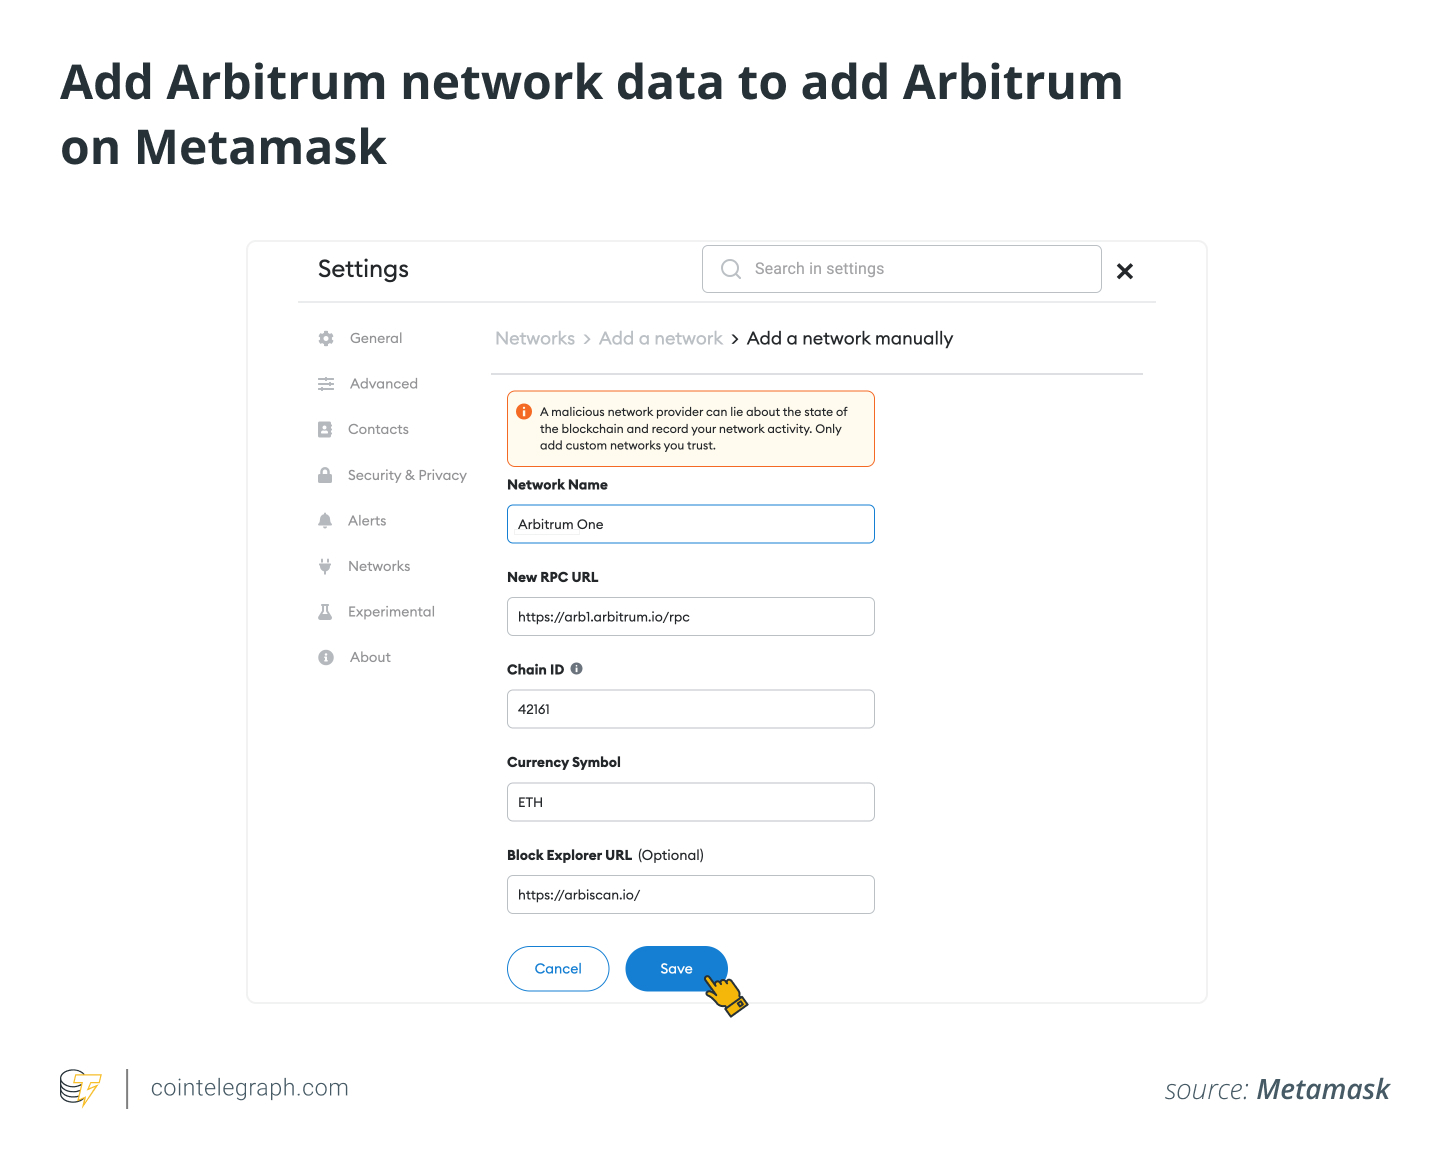 Add Arbitrum network data to add Arbitrum on Metamask